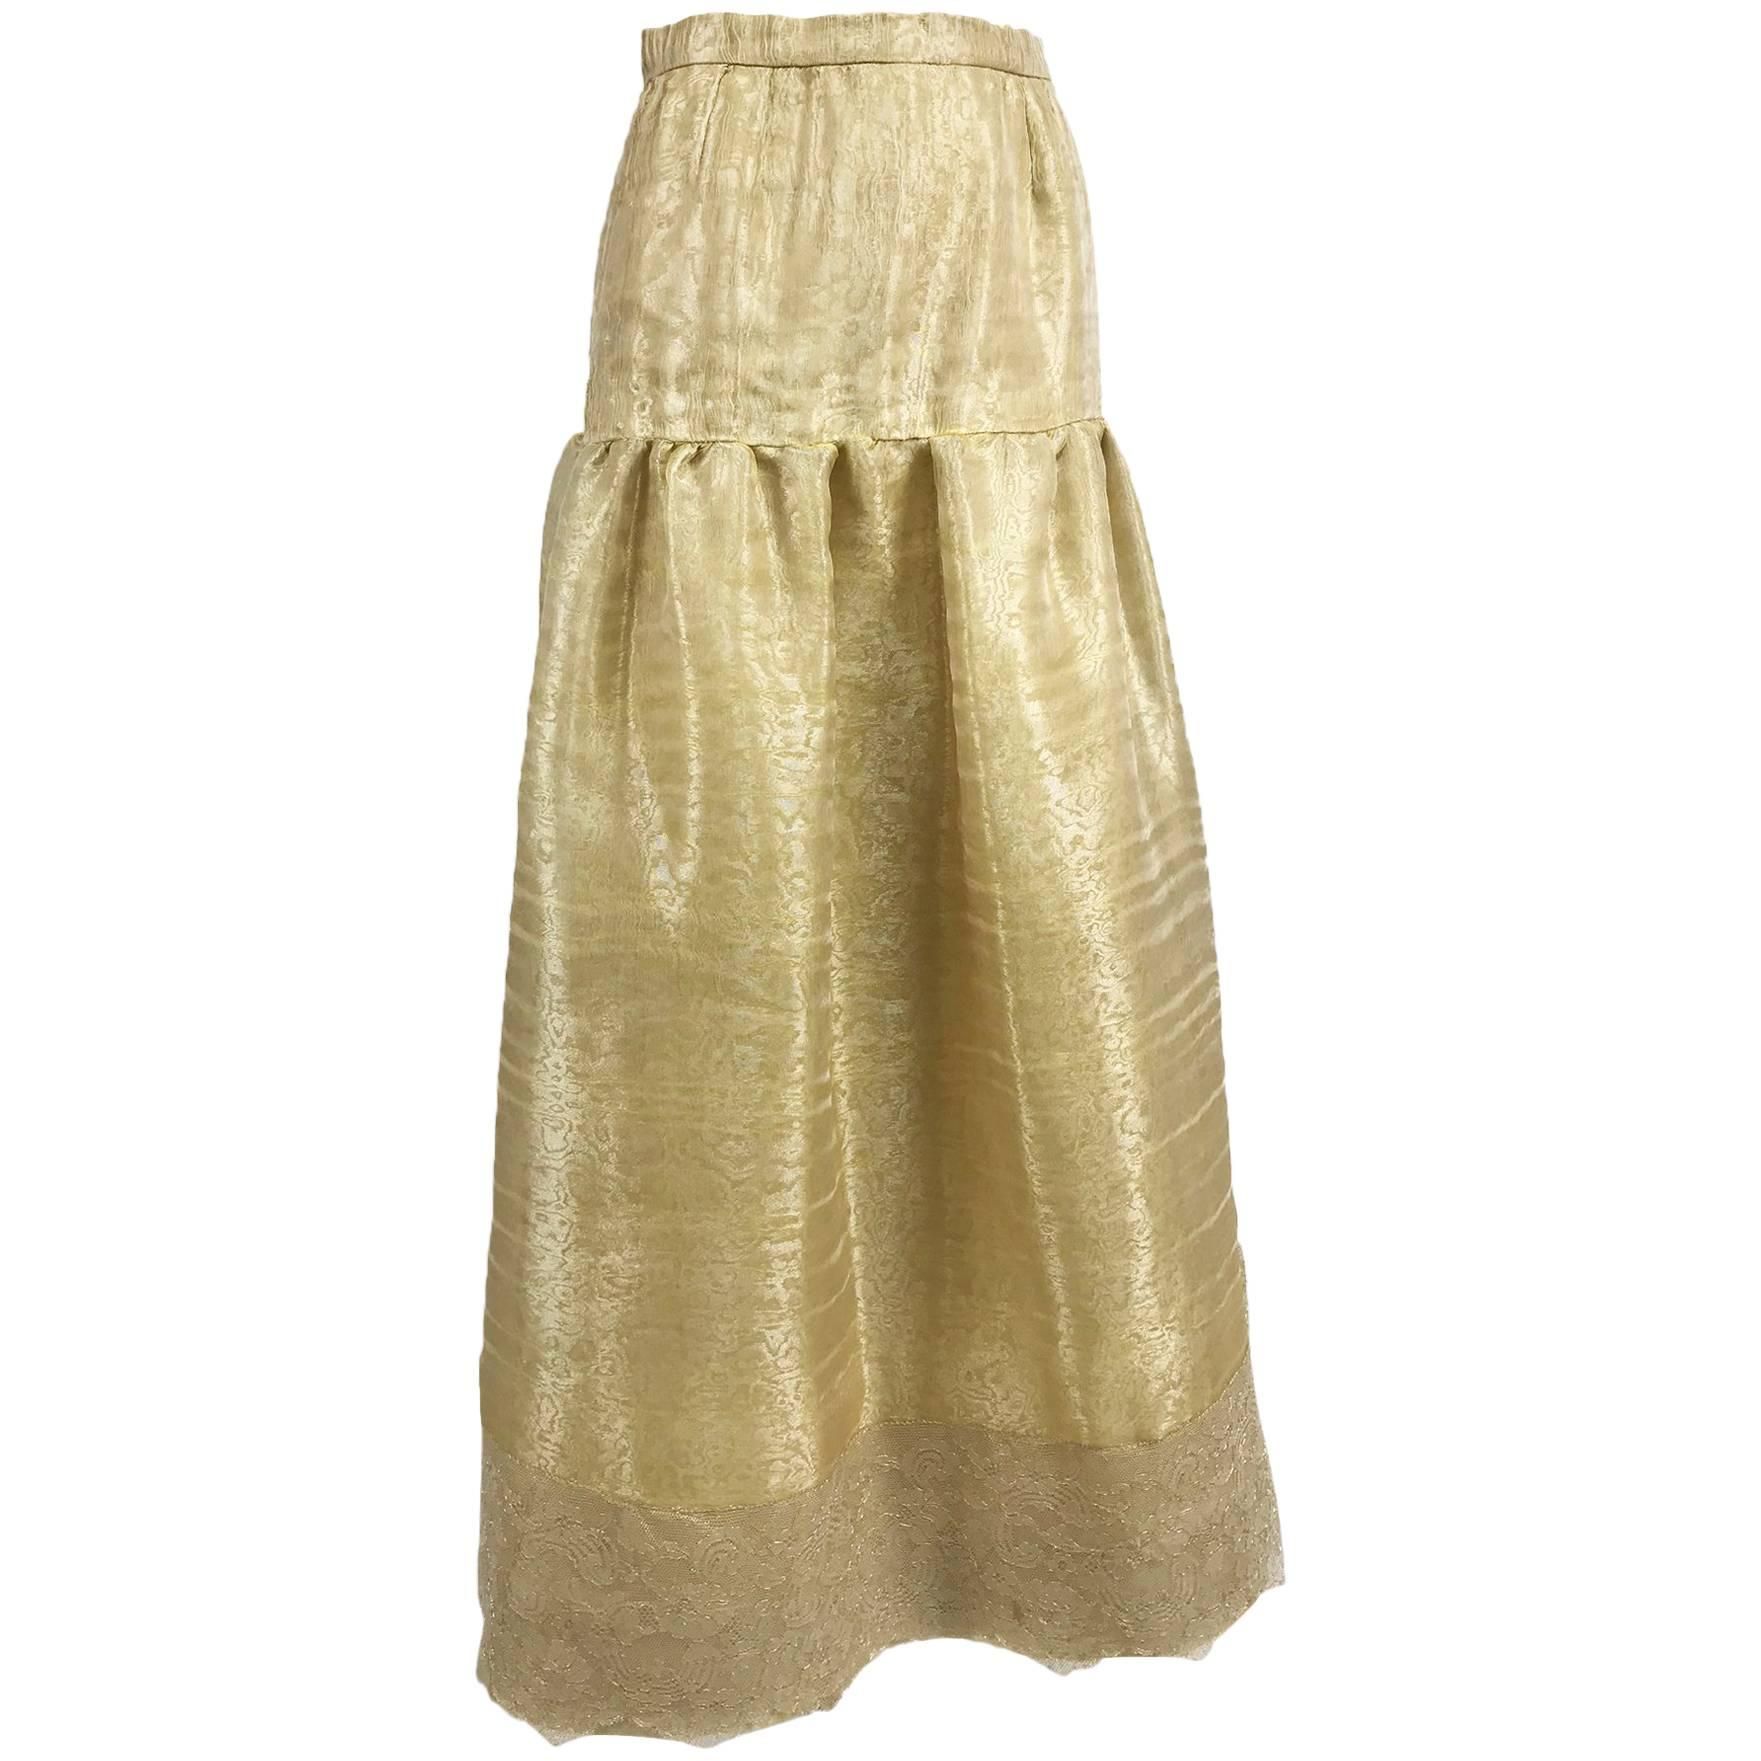 Emanuel Ungaro Studio Couture gold spun silk organza evening skirt